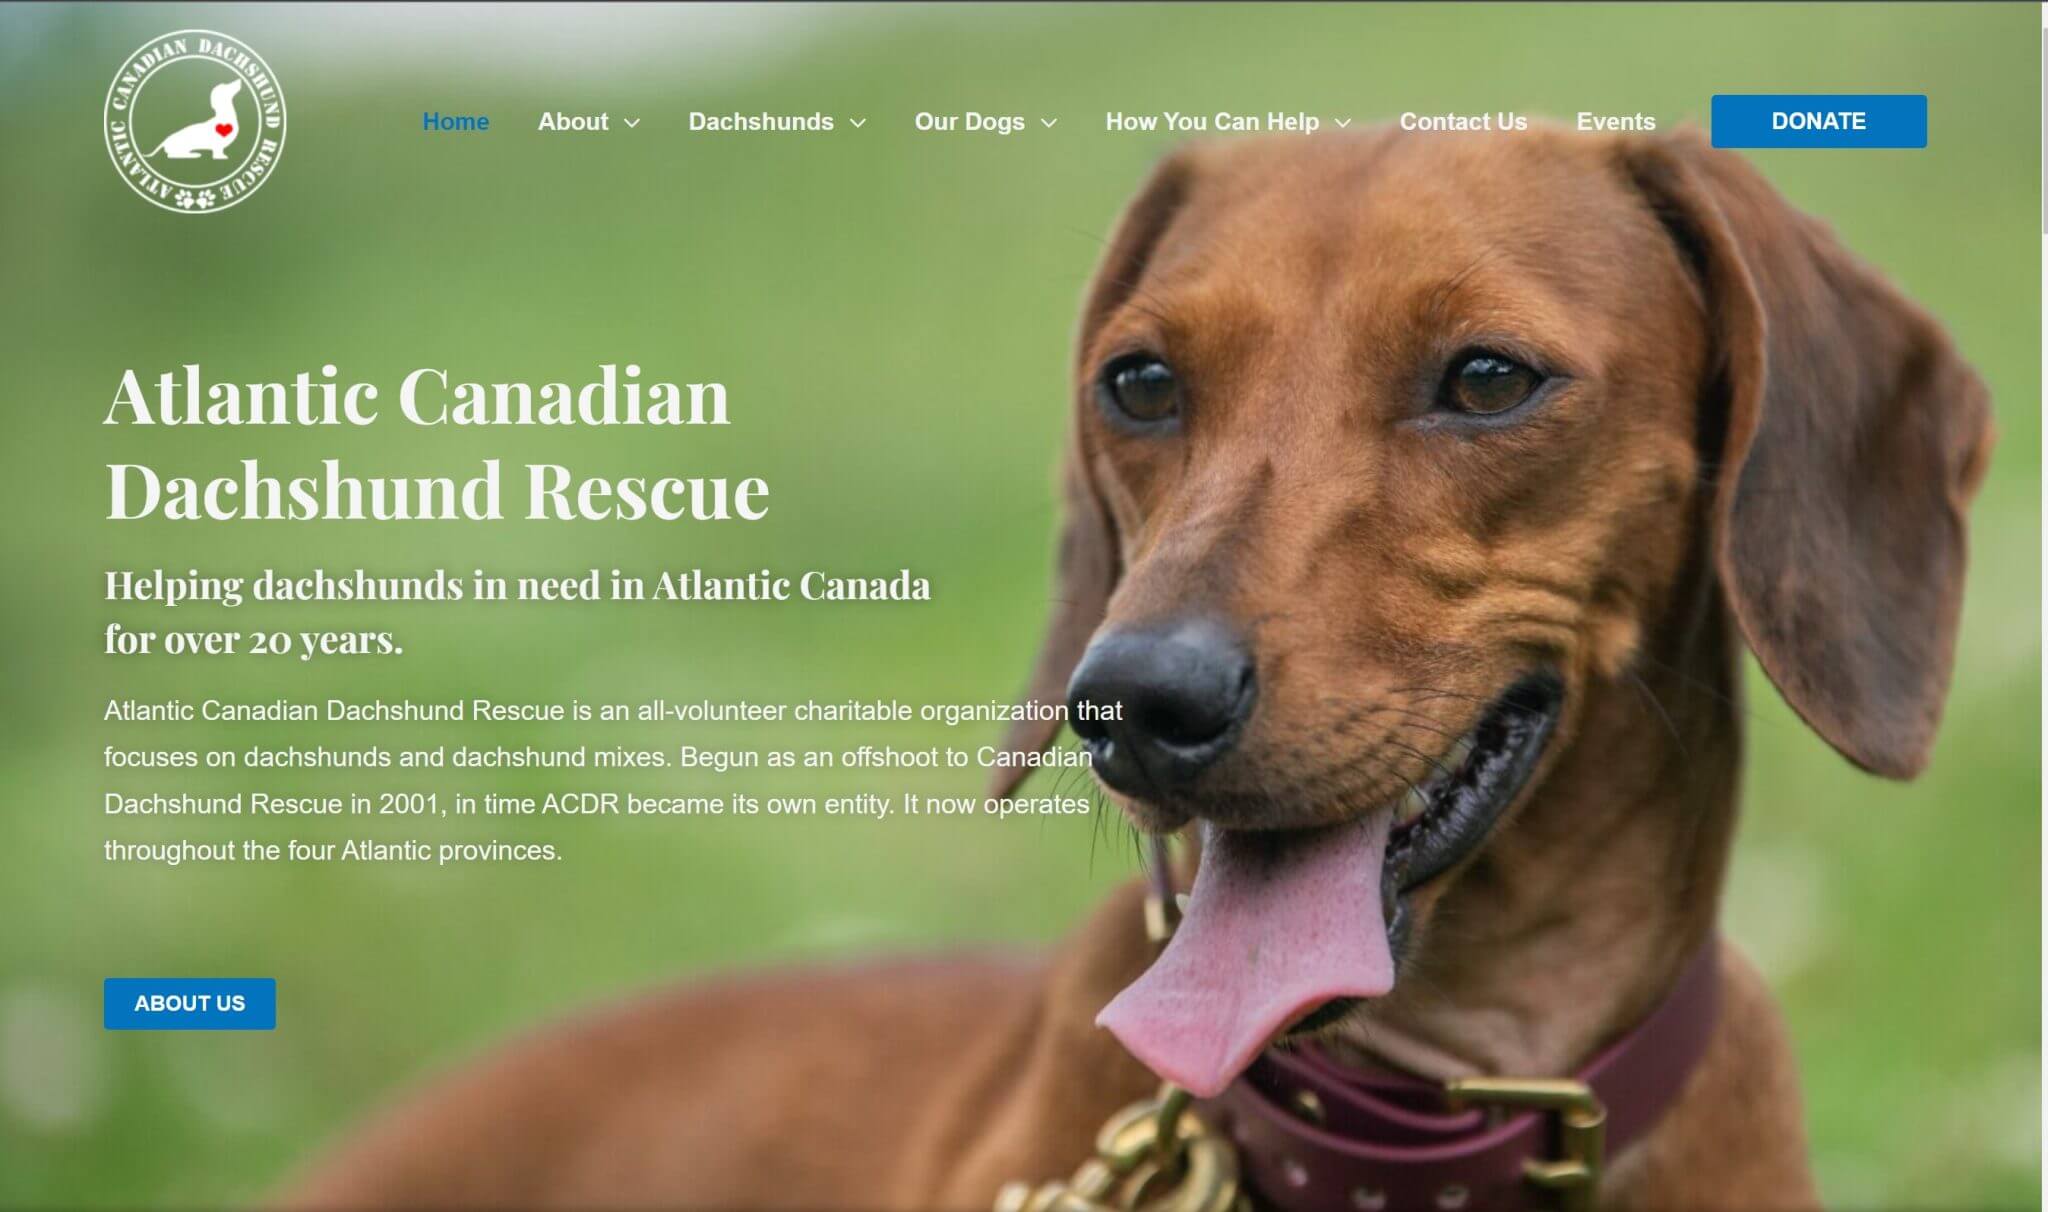 Atlantic Canadian Dachshund Rescue